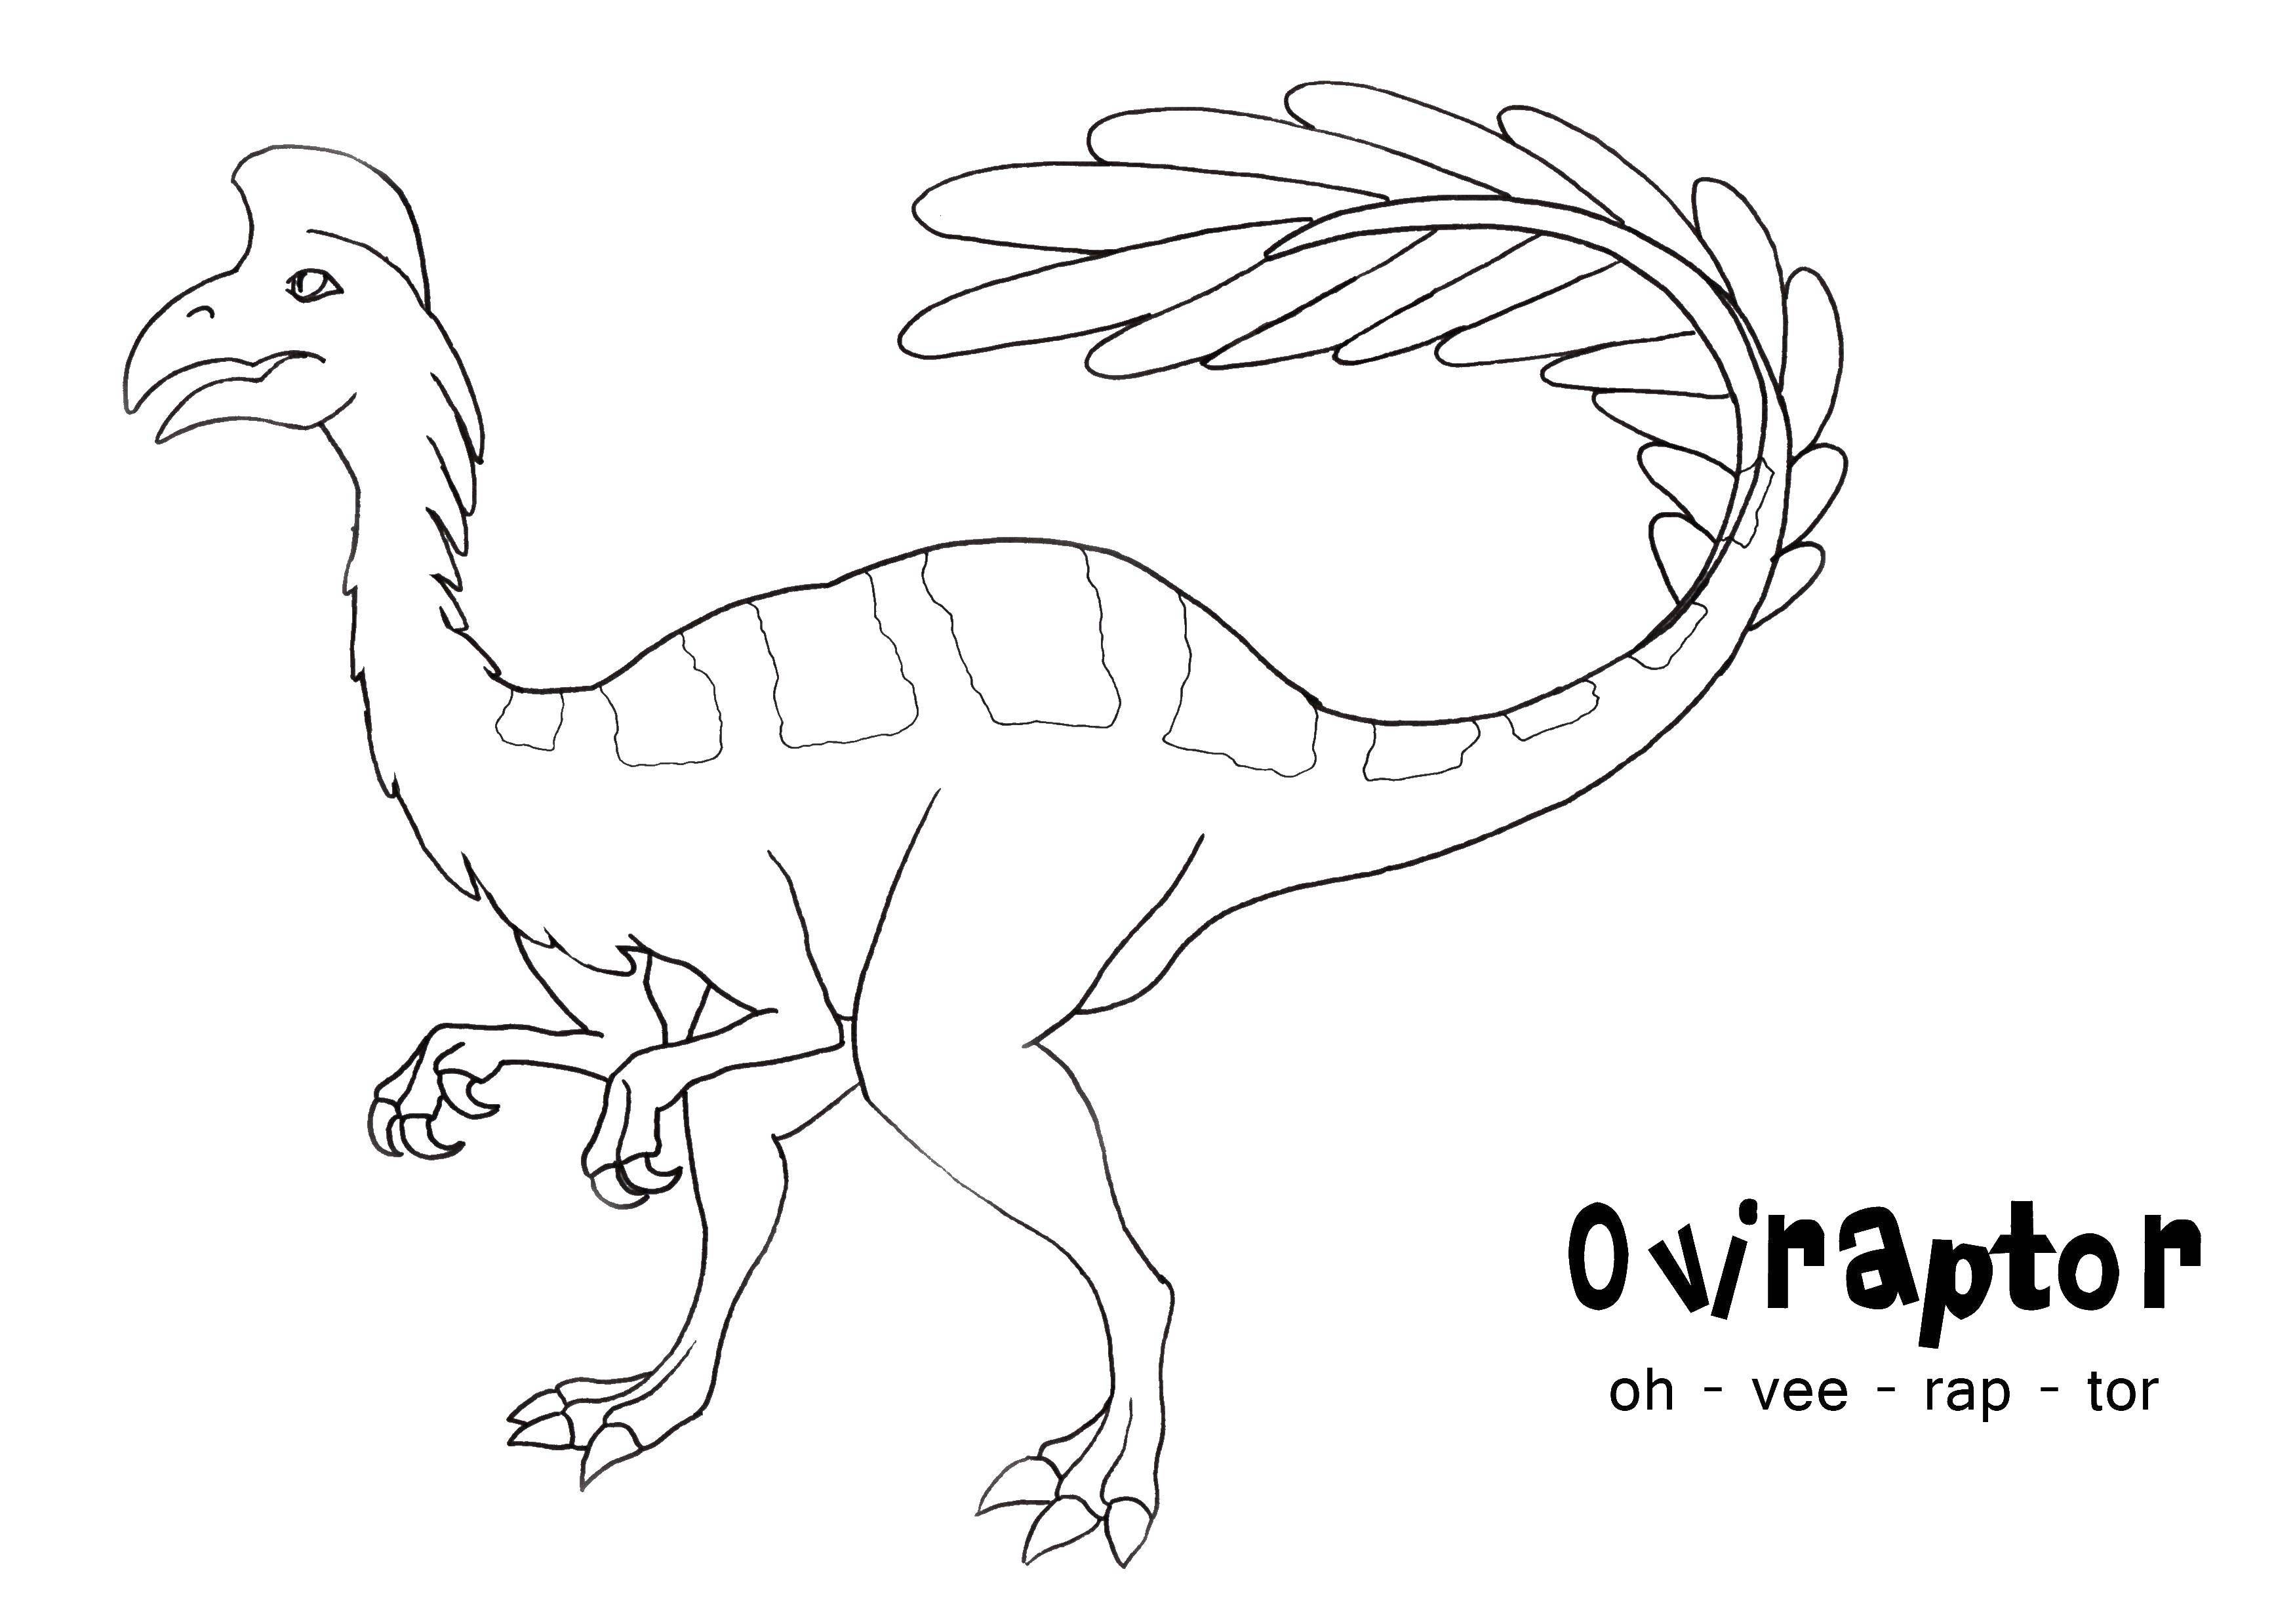 Coloring Dinosaur oviraptor. Category dinosaur. Tags:  dinosaurs, oviraptor.